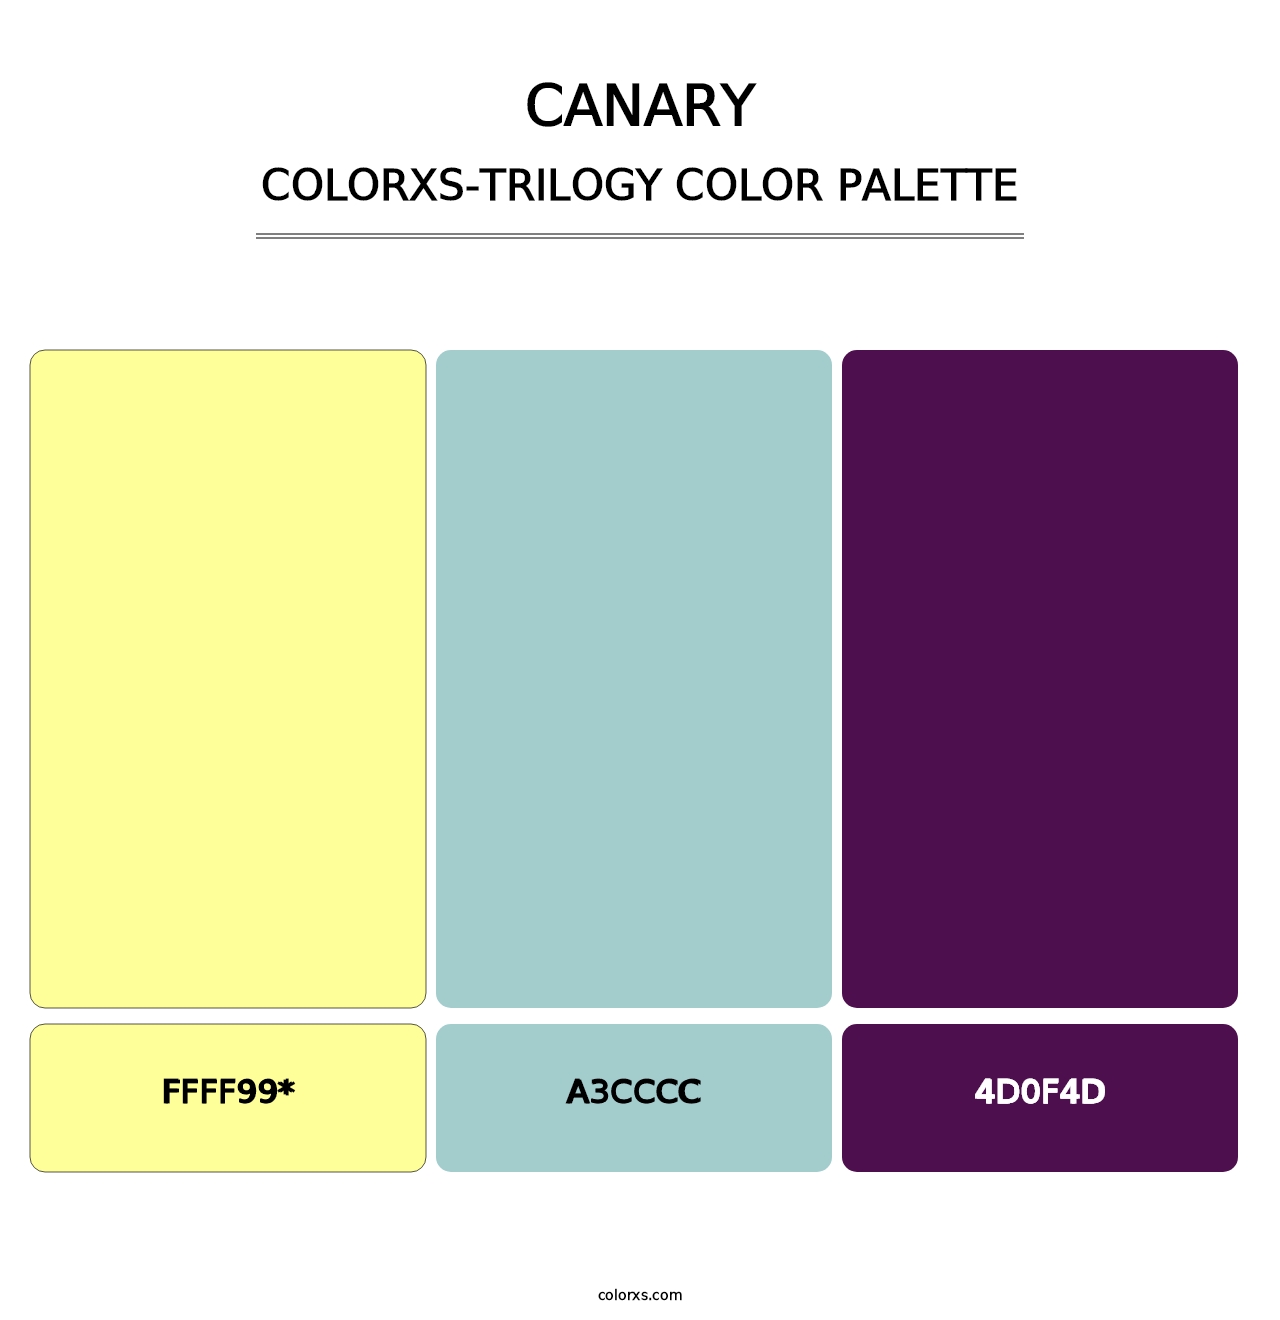 Canary - Colorxs Trilogy Palette